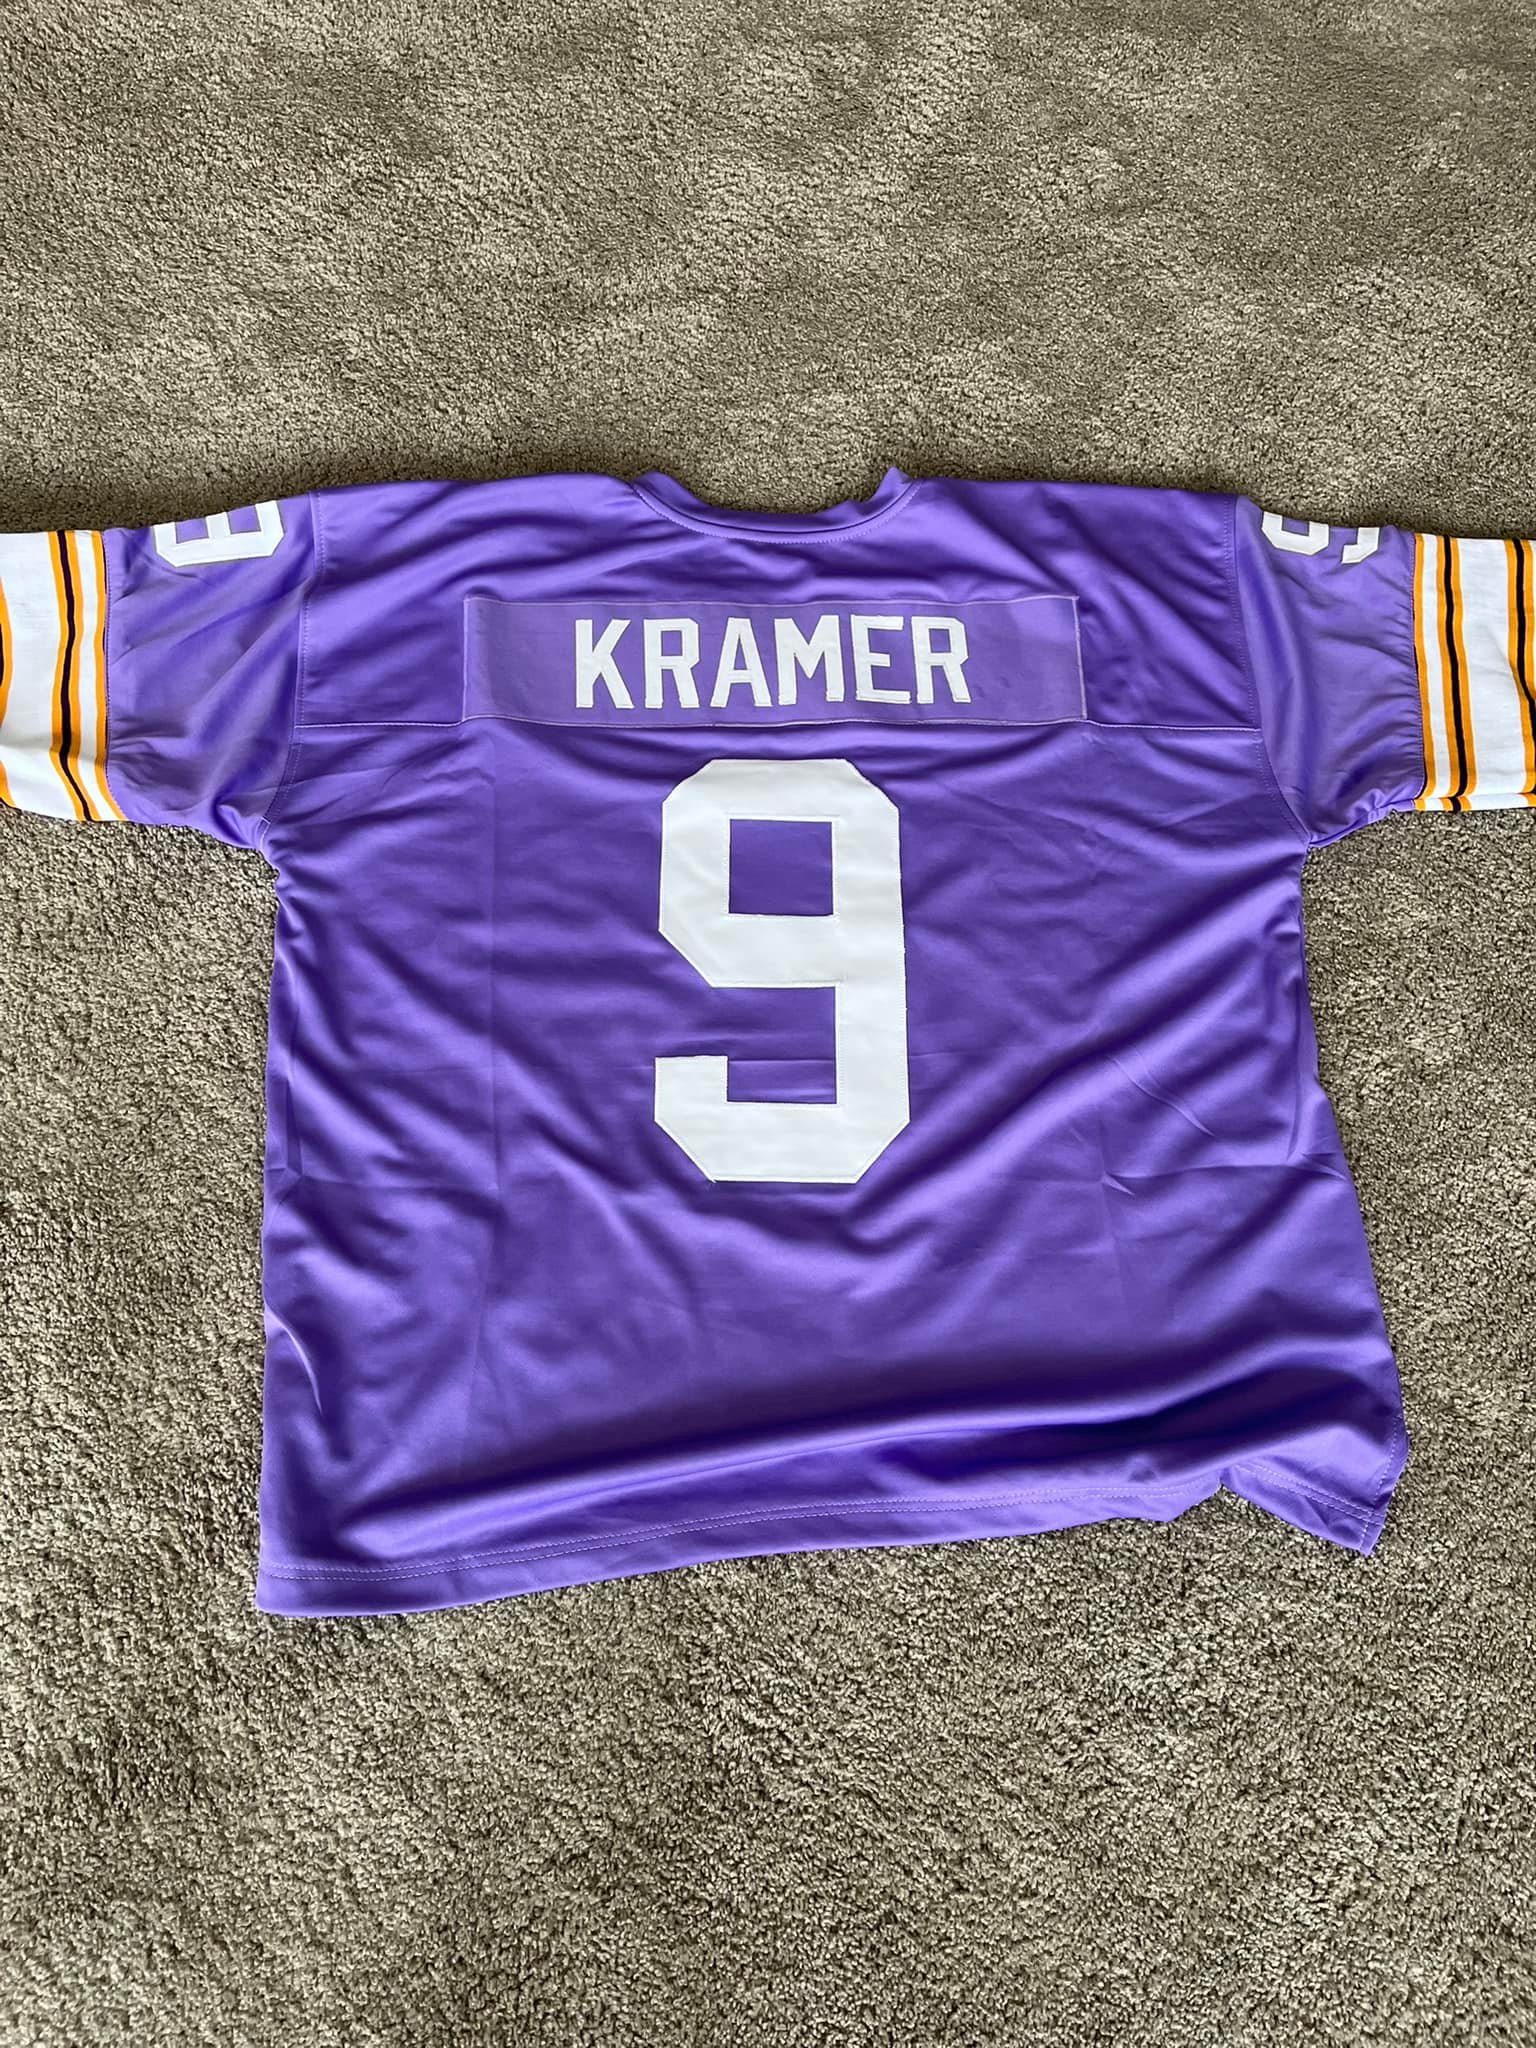 Tommy Kramer Jersey Sweatshirt Hoodie - 'Purple Home' or 'White Away